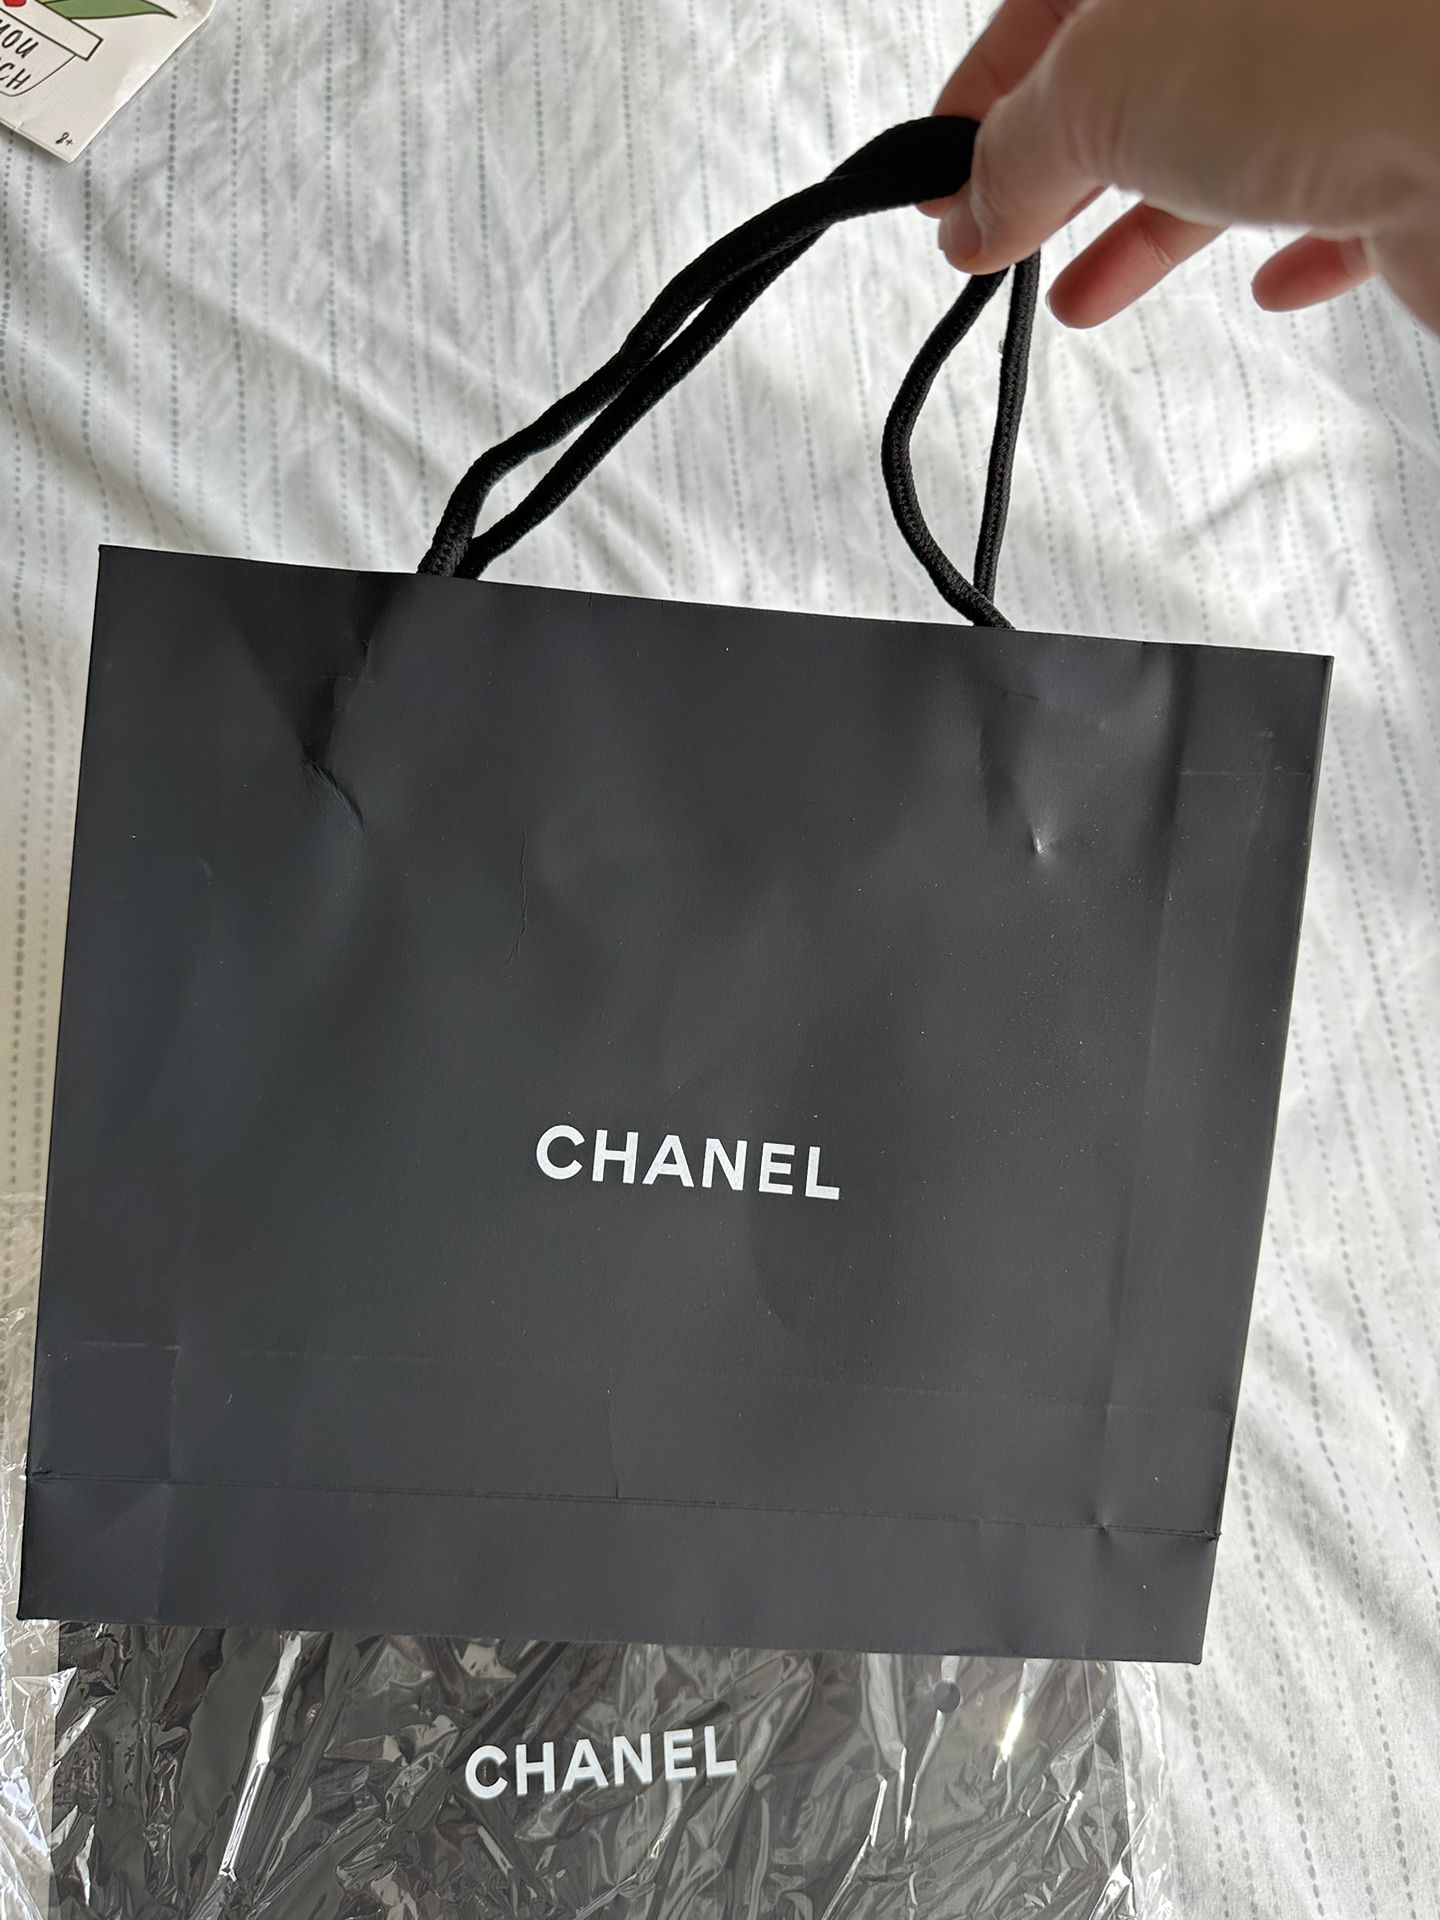 10 Pieces Chanel Shopping Bag